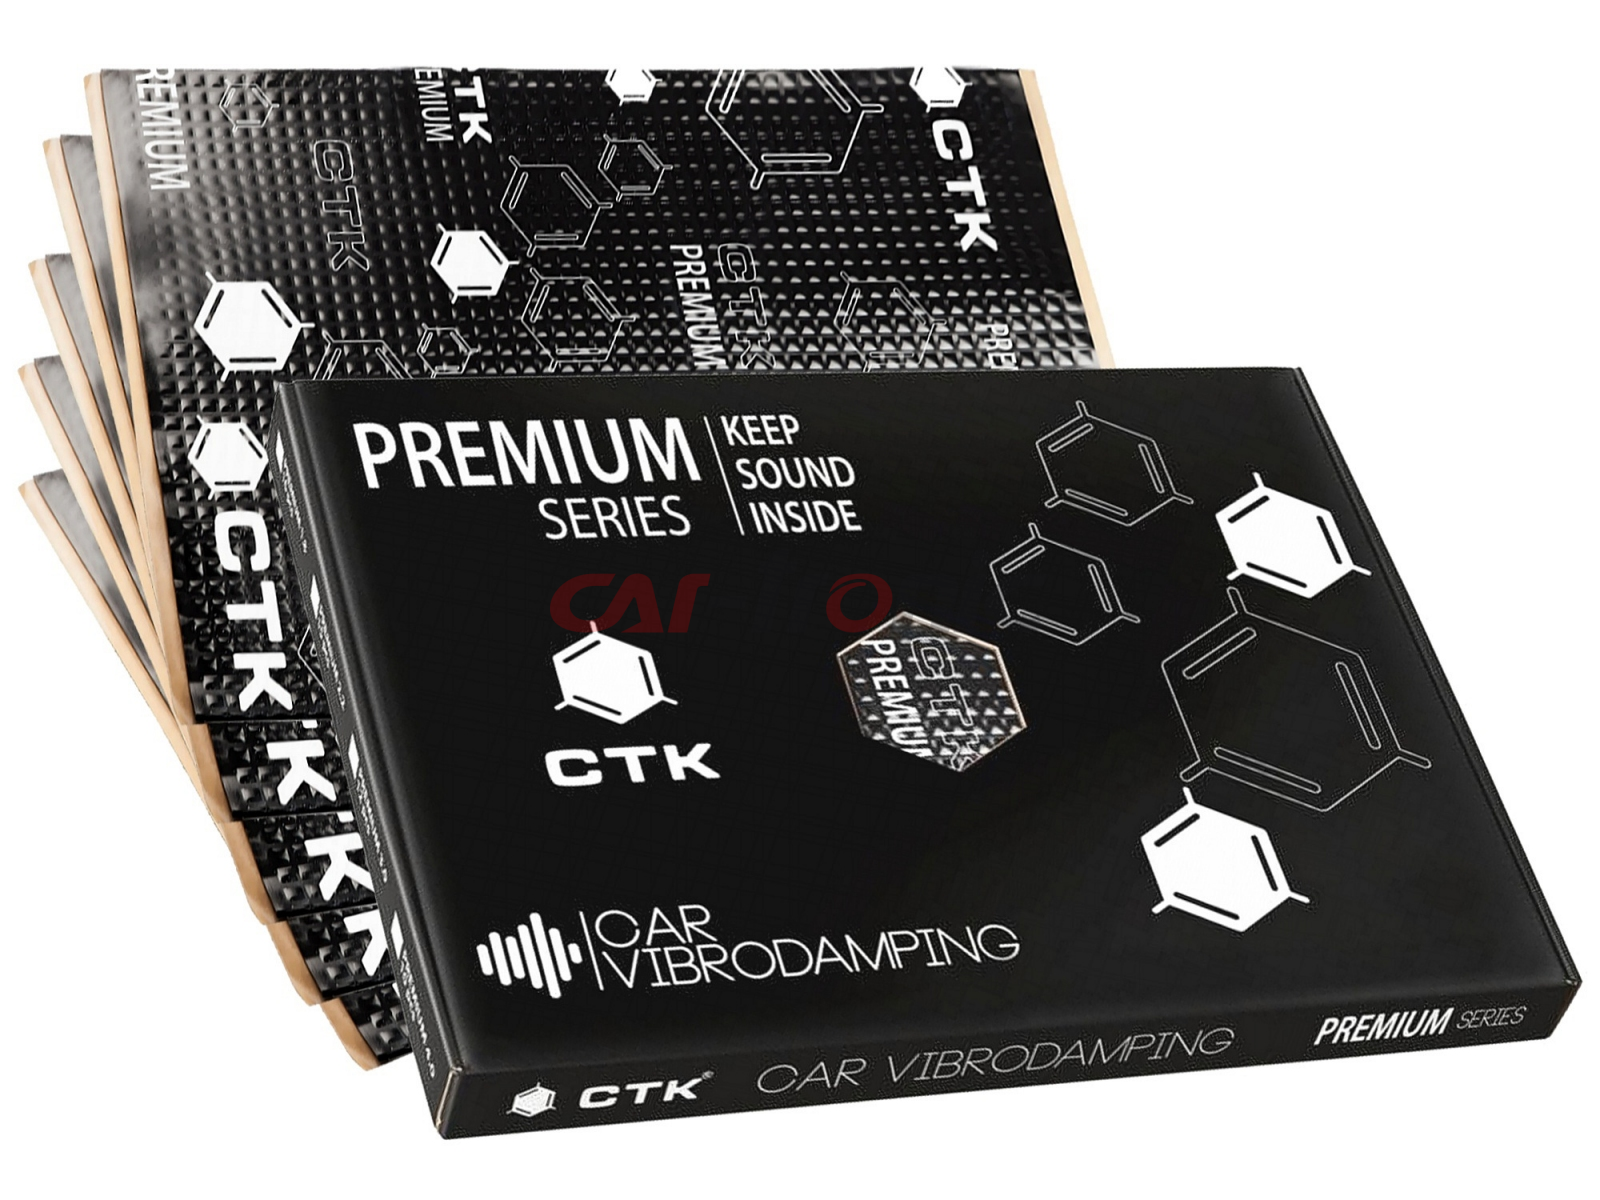 CTK Premium 1.8 Box - mata tłumiąca, 16szt./3m2